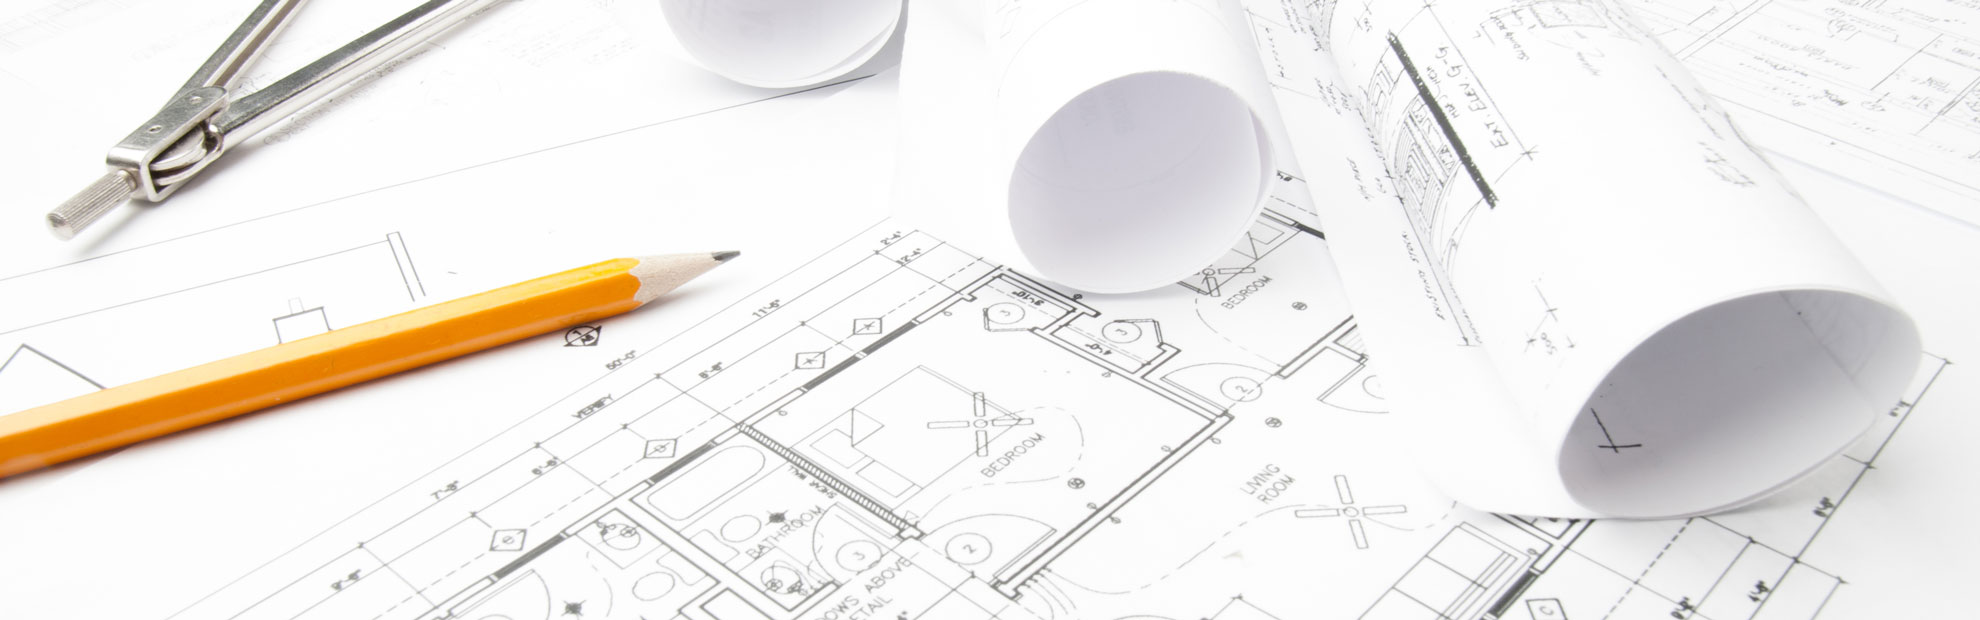 construction-planning-drawings-2021-08-27-11-27-28-utc(1)